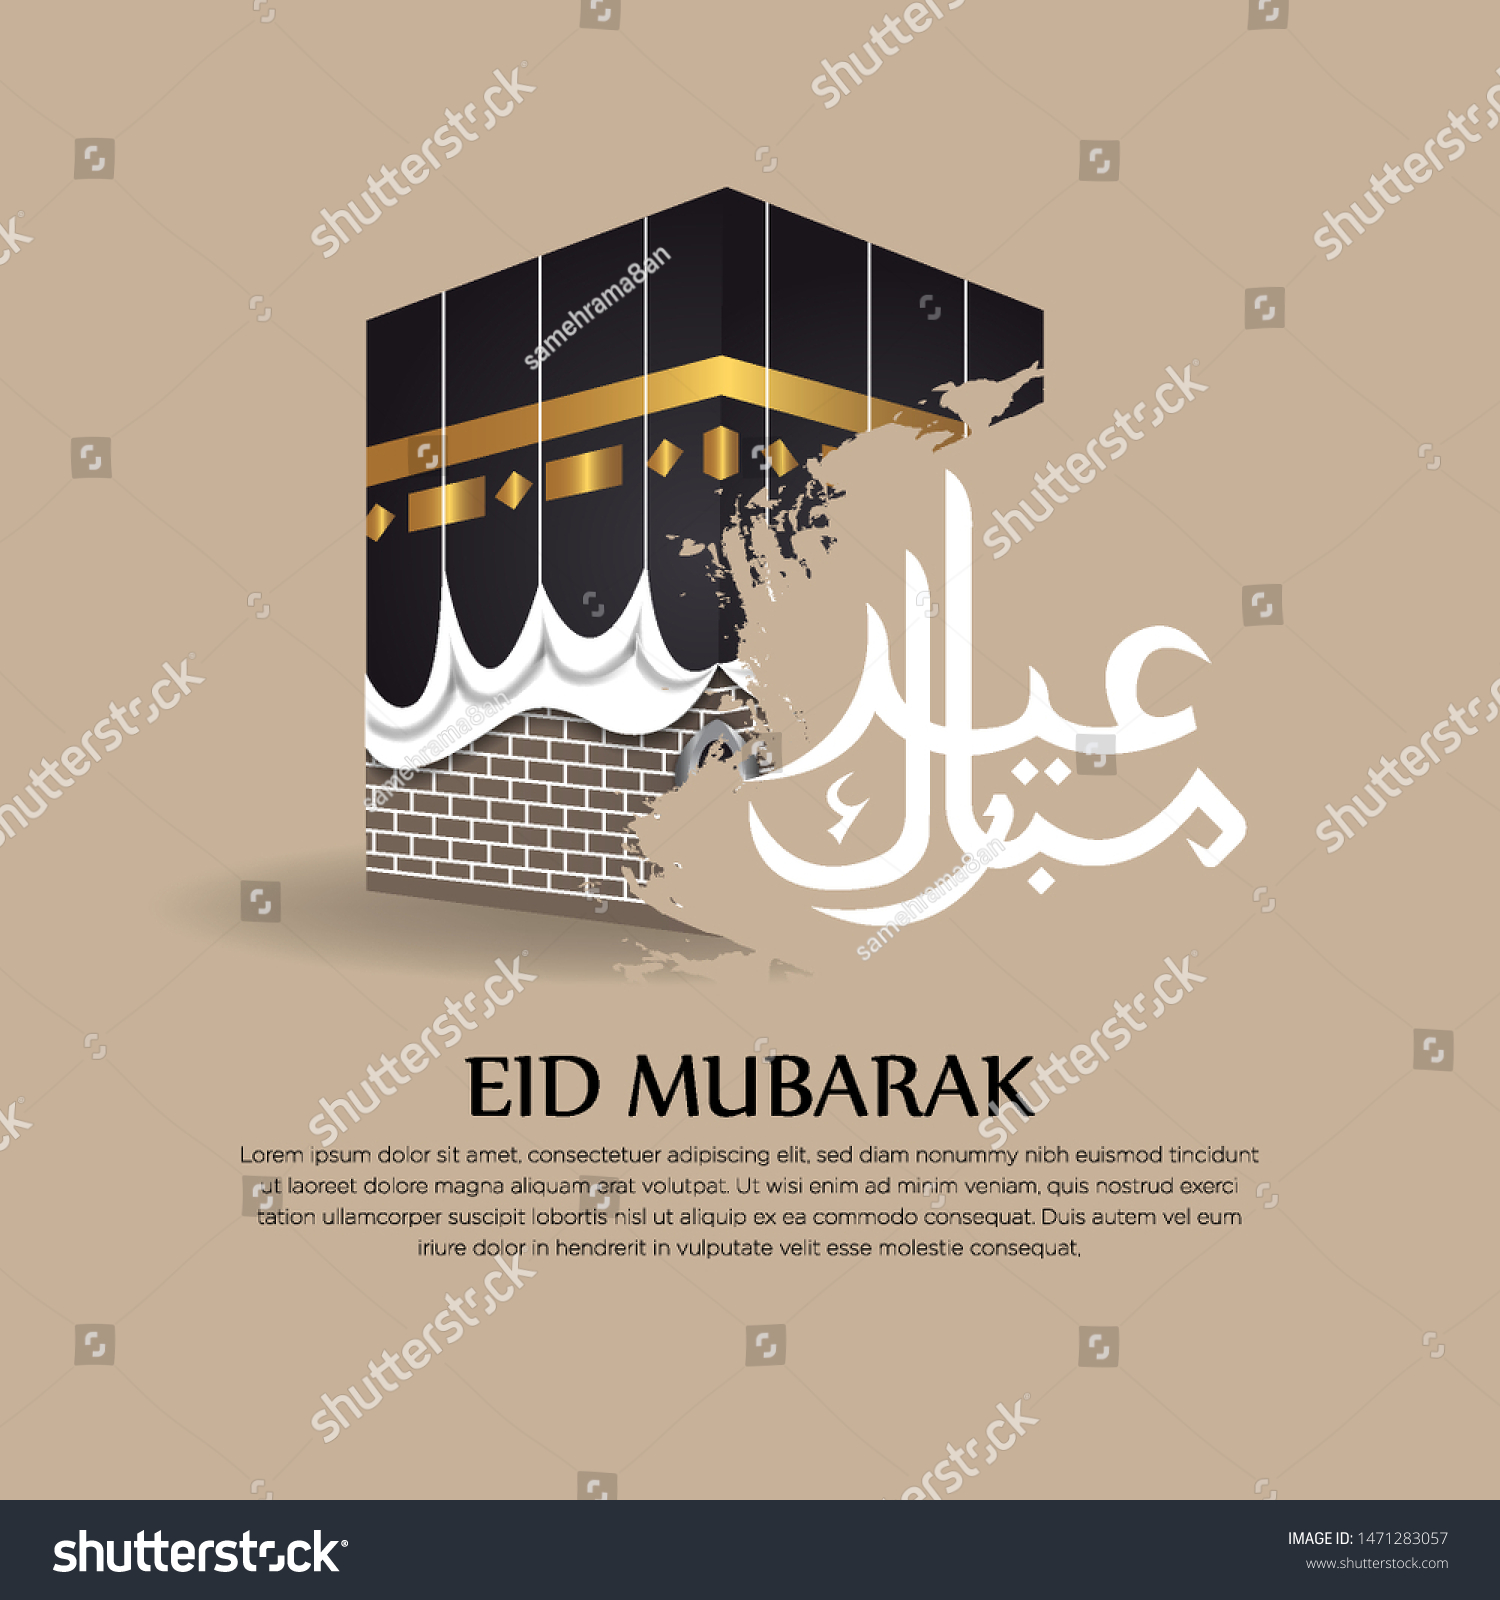 Eid 2021 adha is al saudi arabia when Eid al